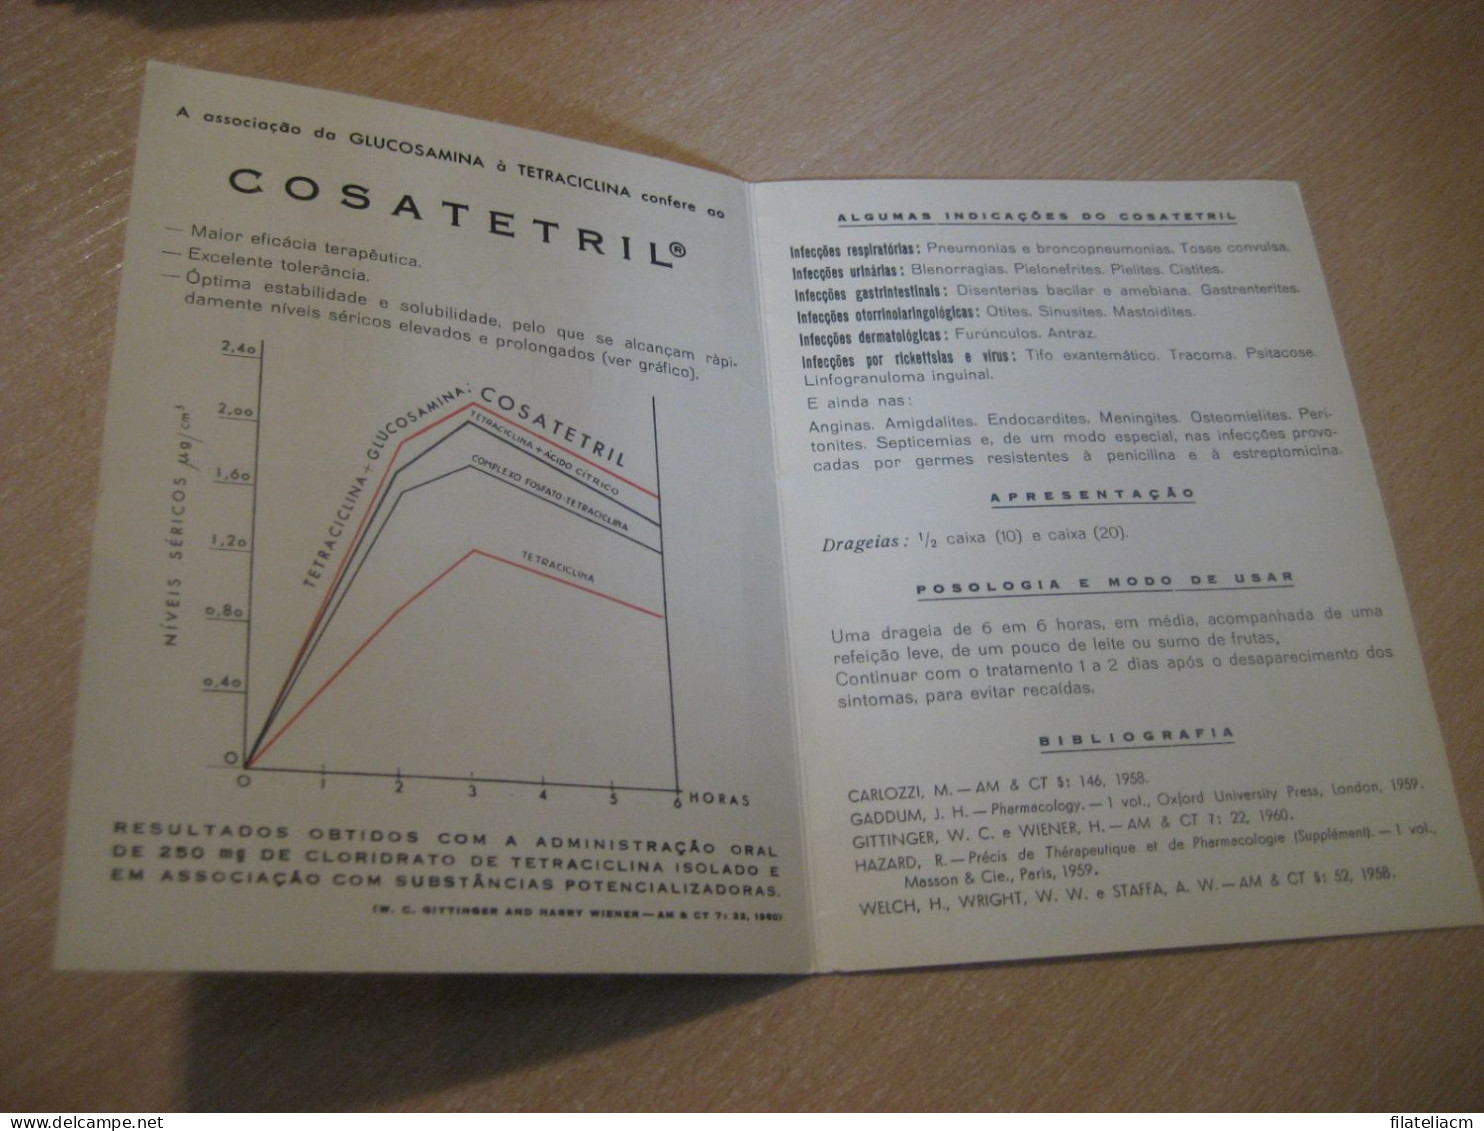 PORTO 1961 To Figueira Da Foz BIAL Cosatetril Tetraciclina Glucosamina Pharmacy Health Meter Mail Document Card PORTUGAL - Storia Postale